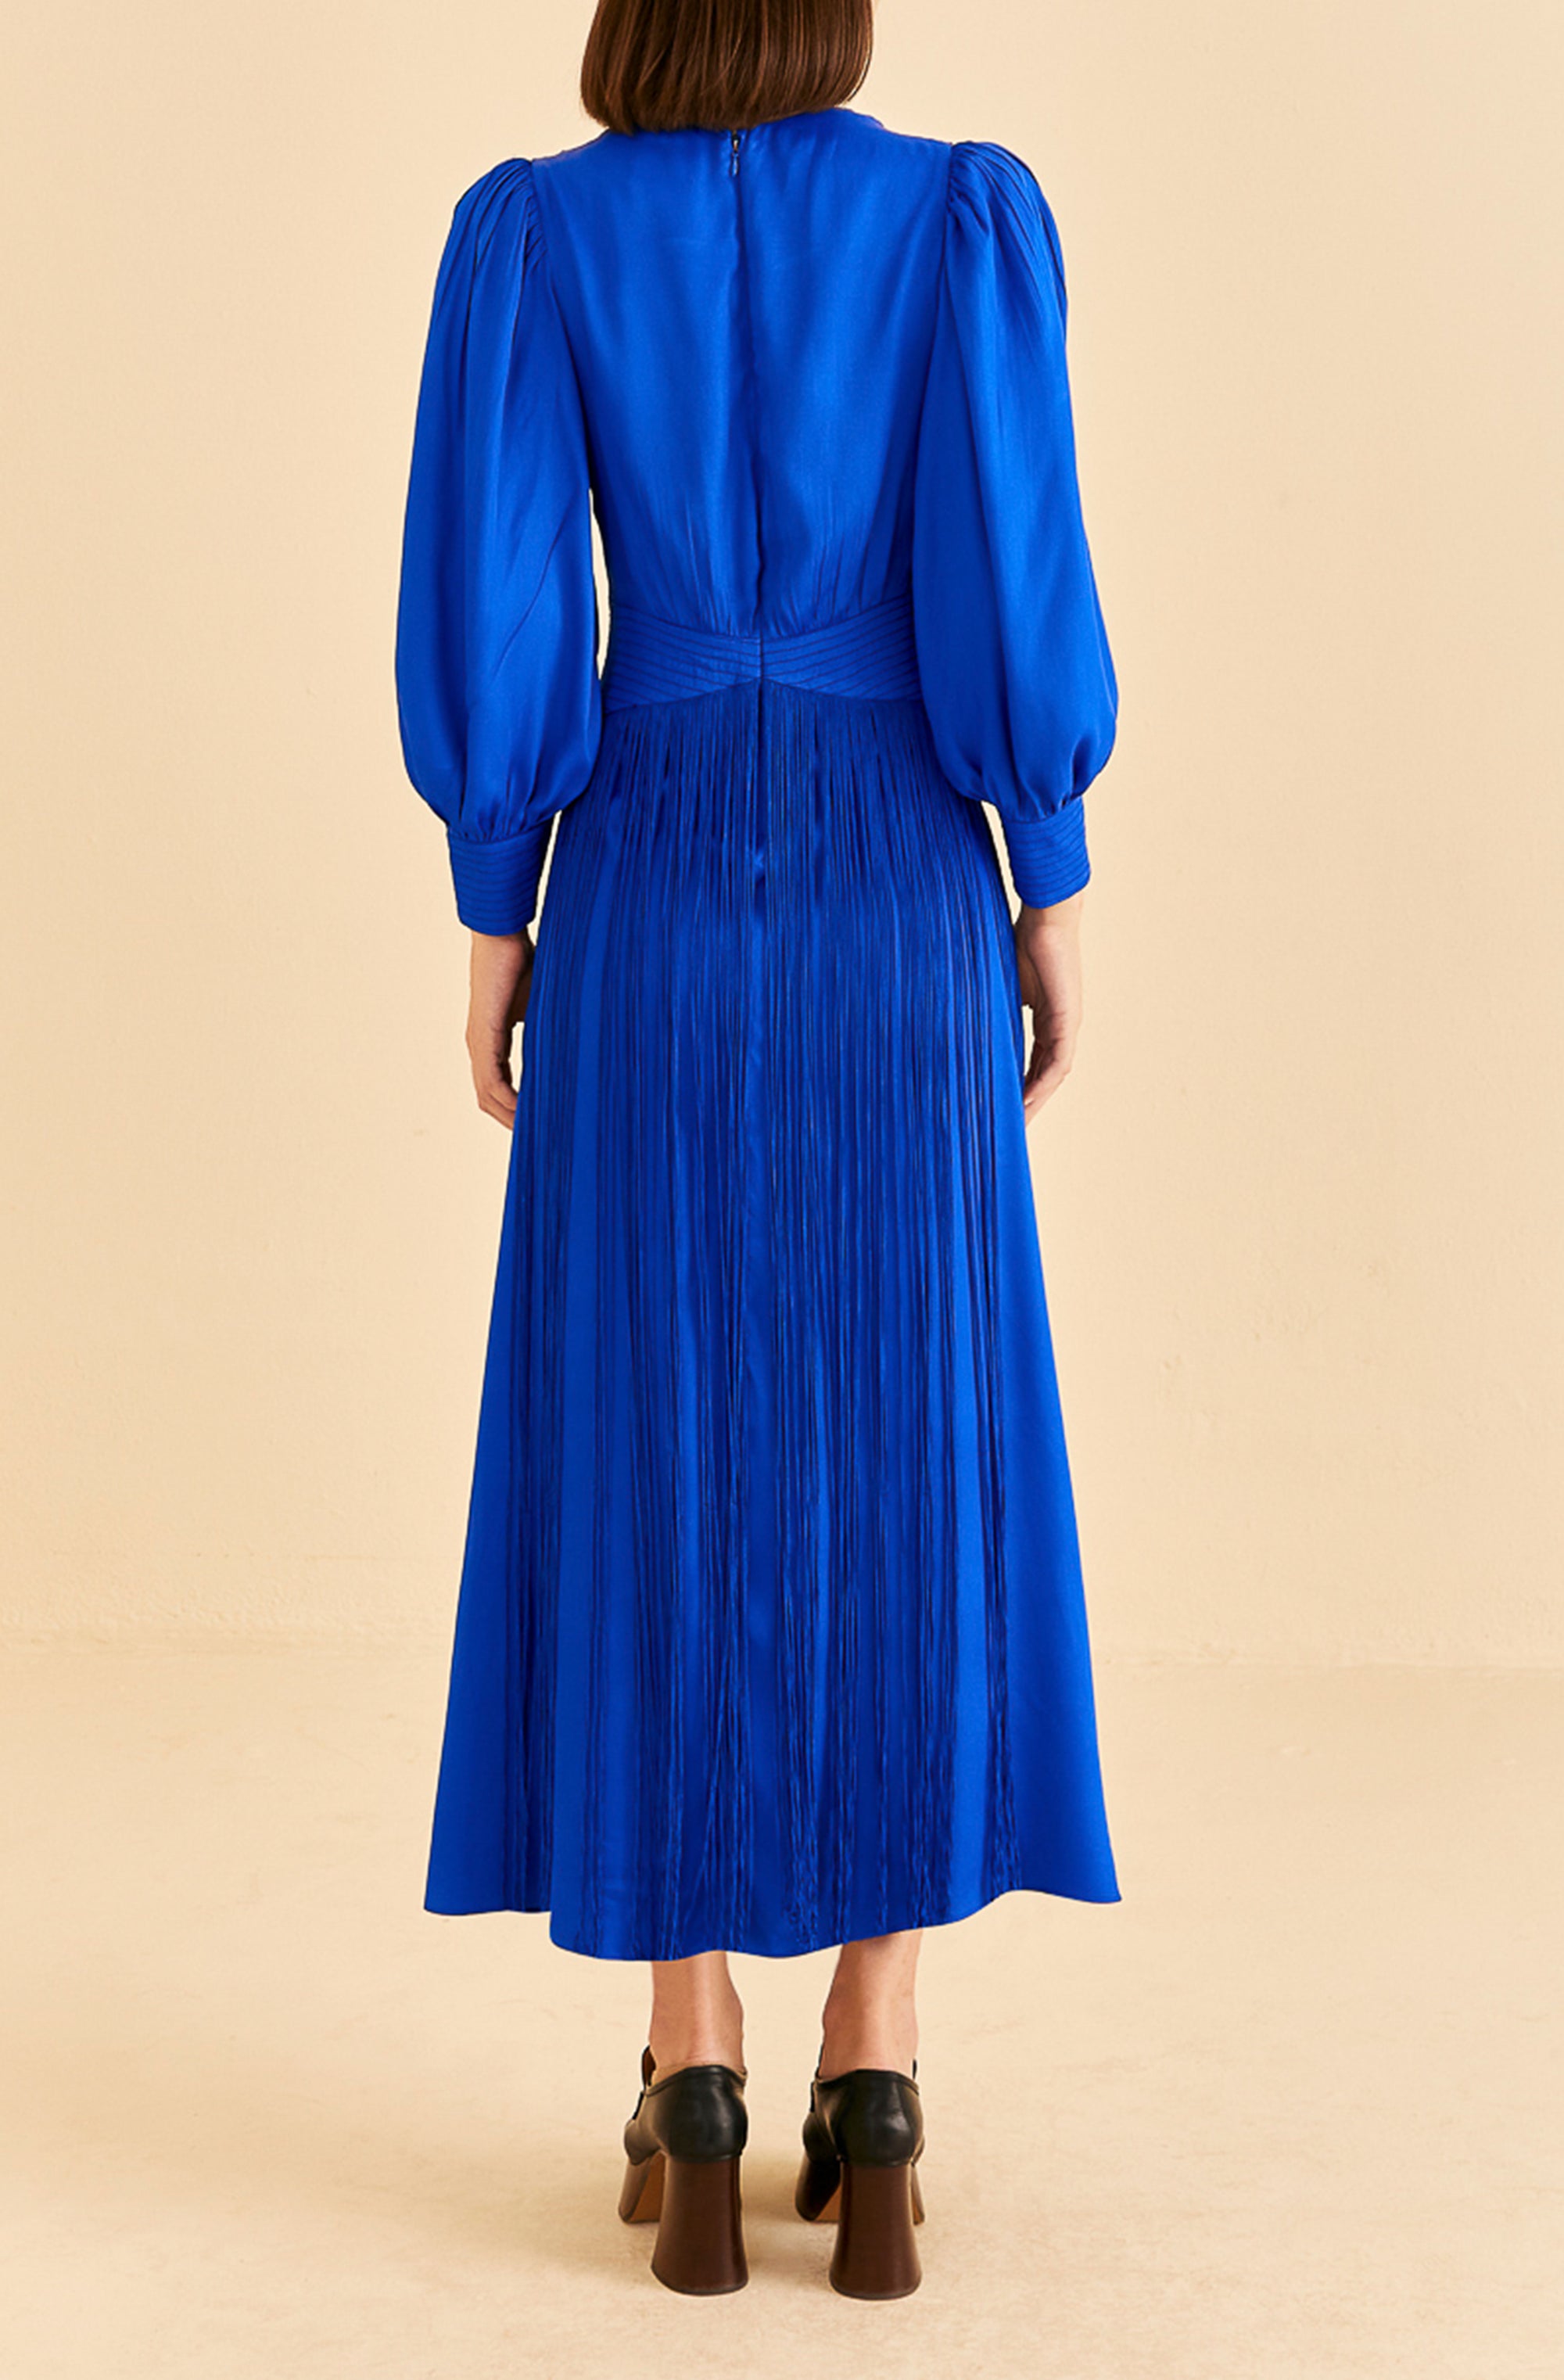 Bright Blue Fringes Maxi Dress